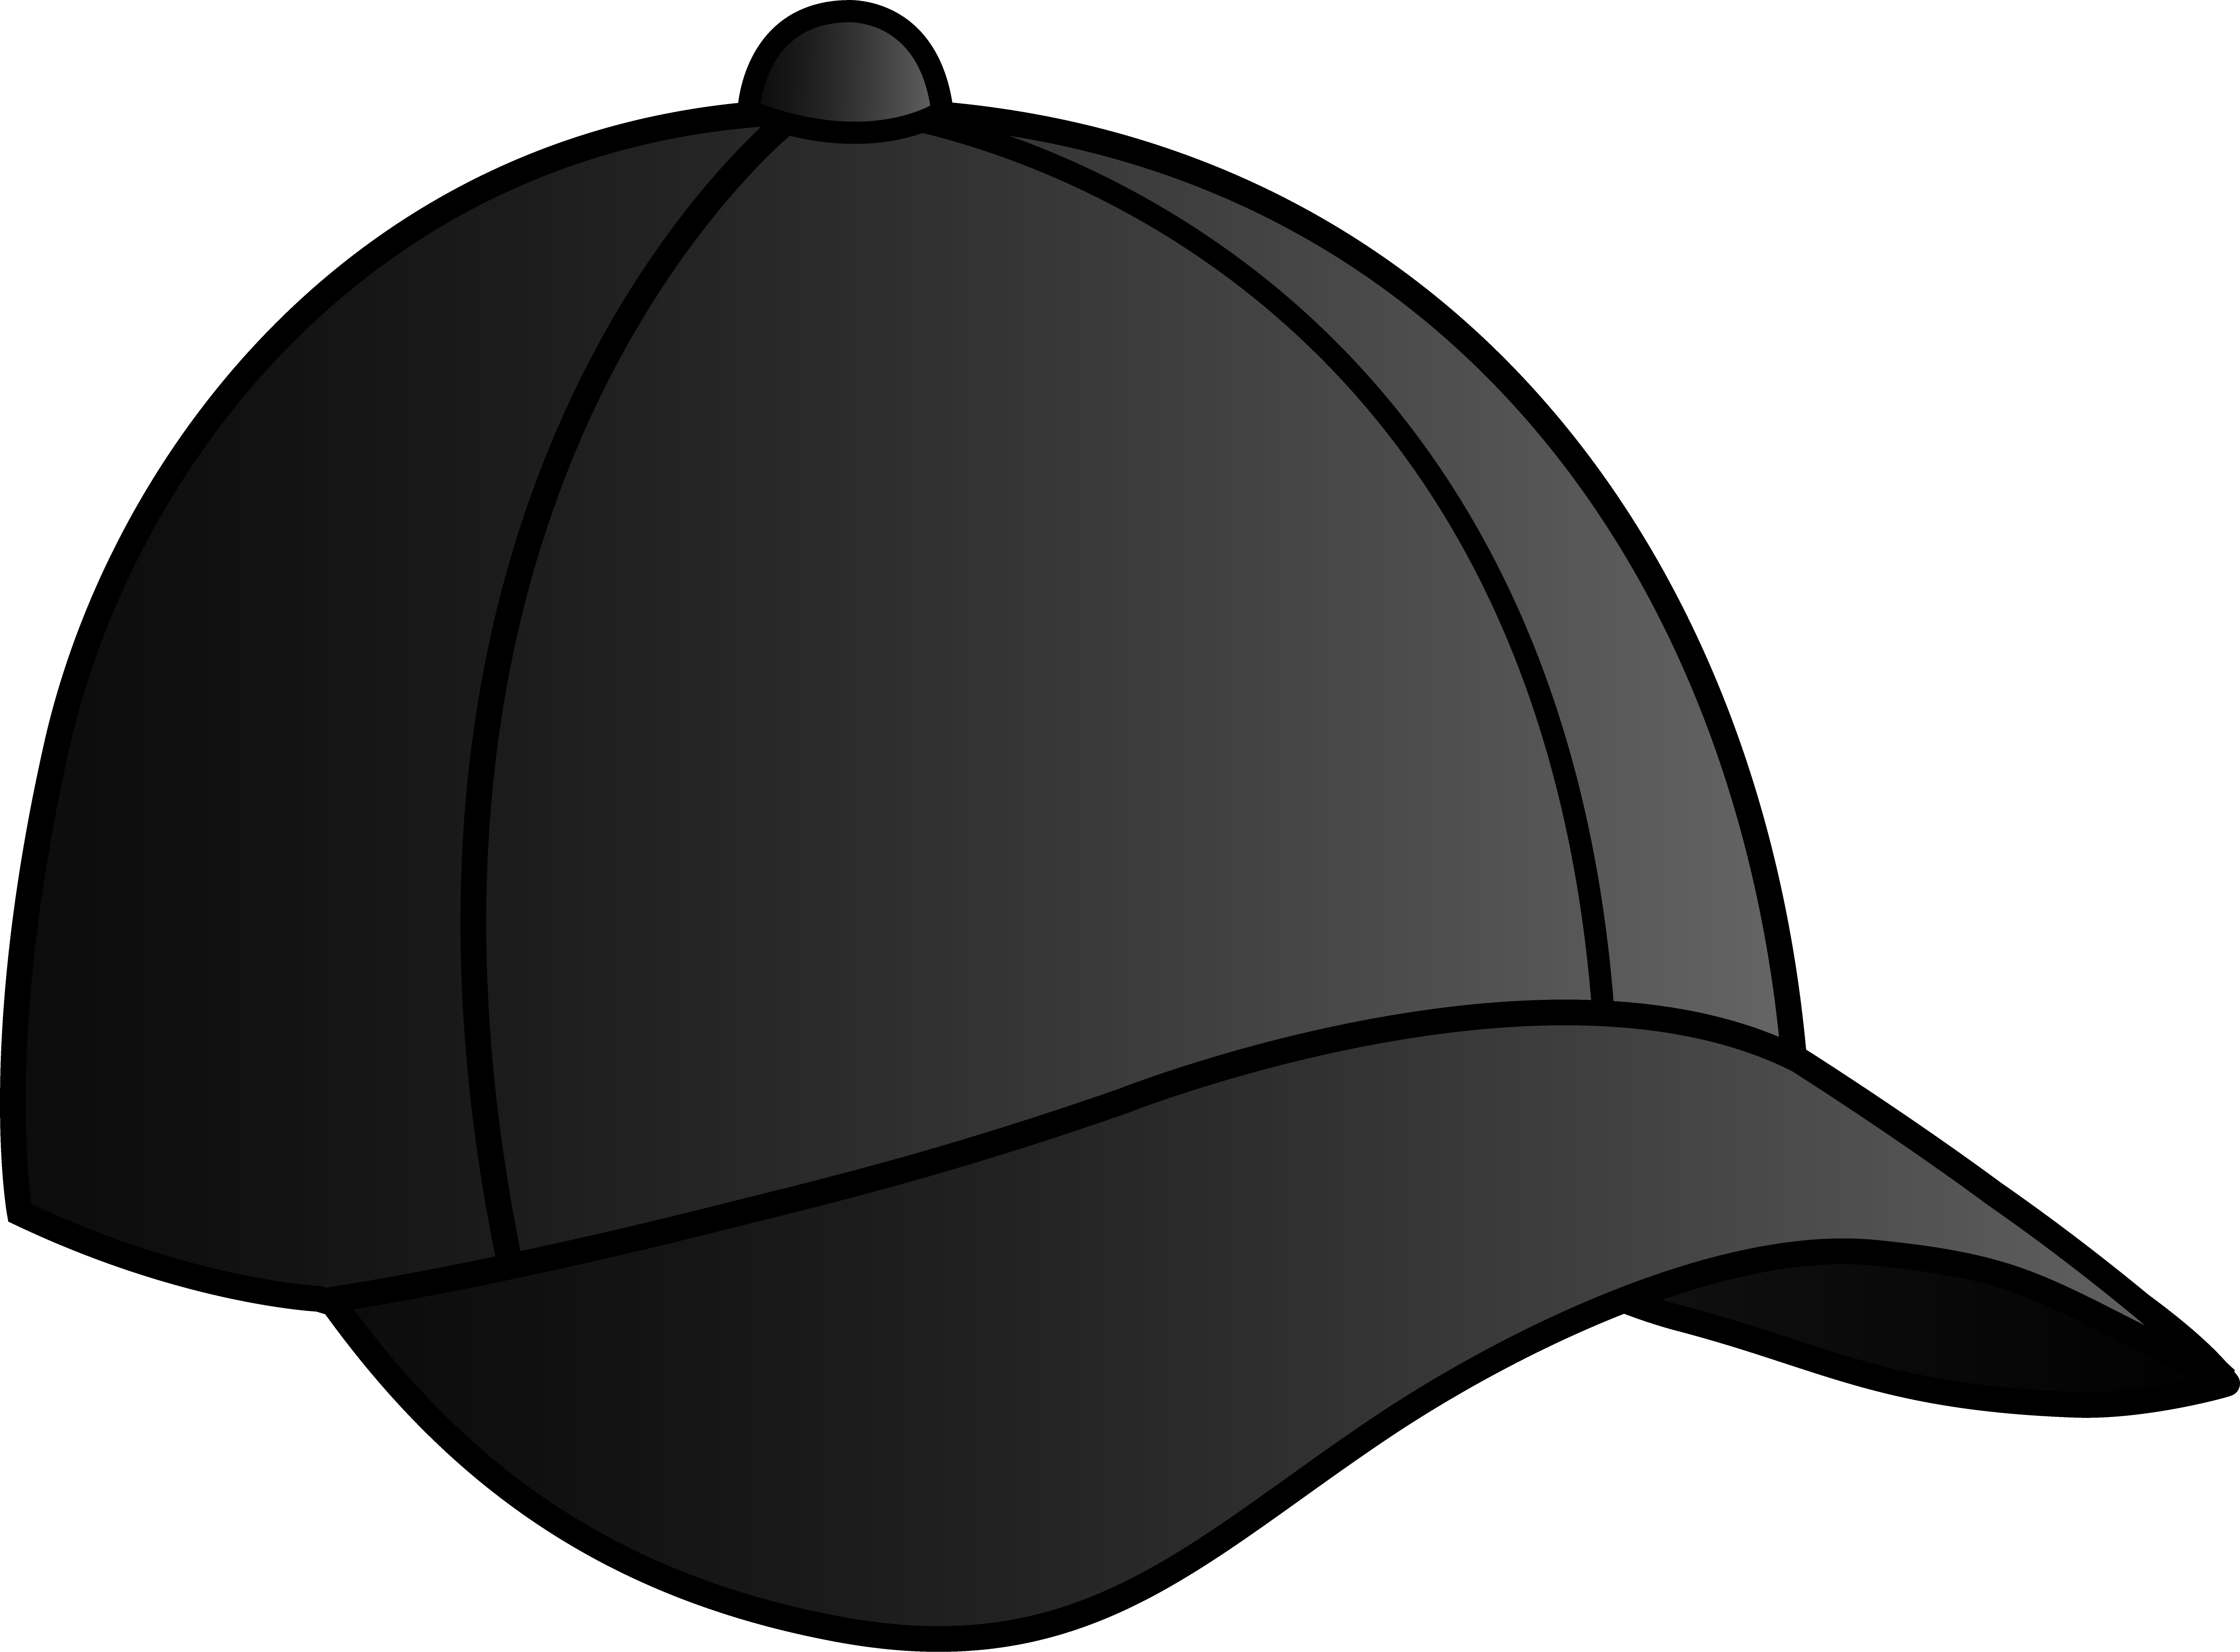 Backwards baseball cap clipart